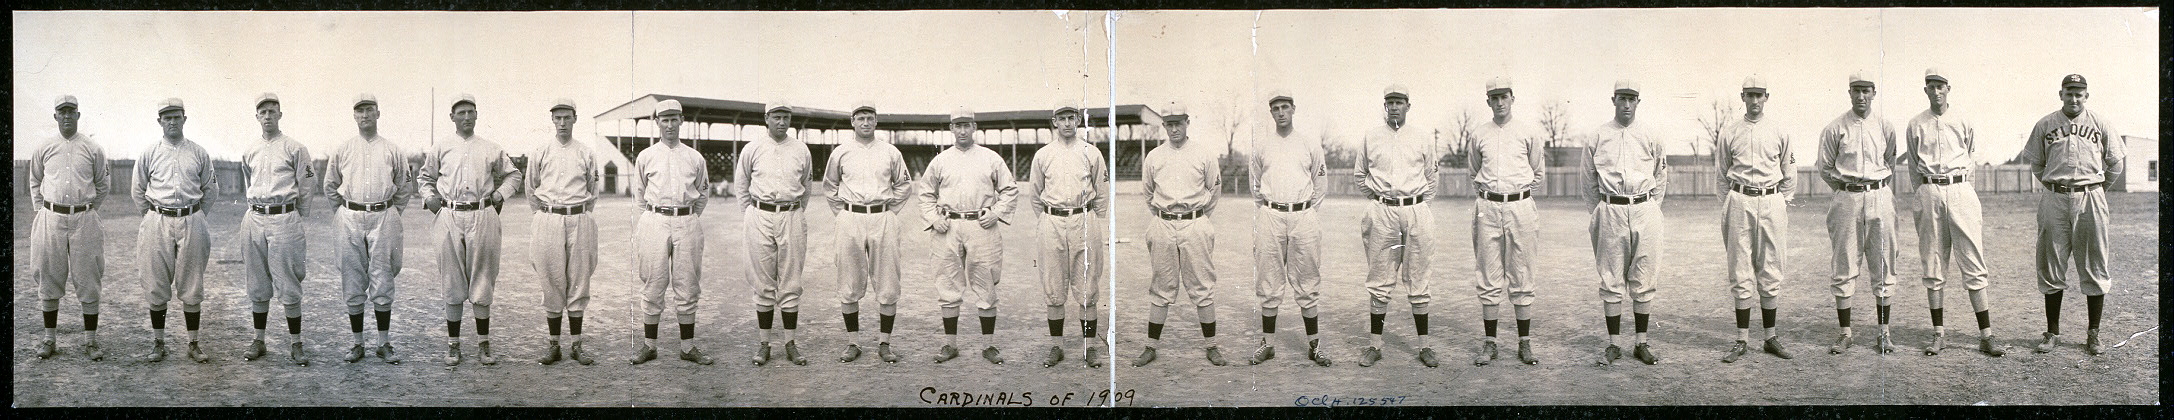 Cardinals of 1909.jpg